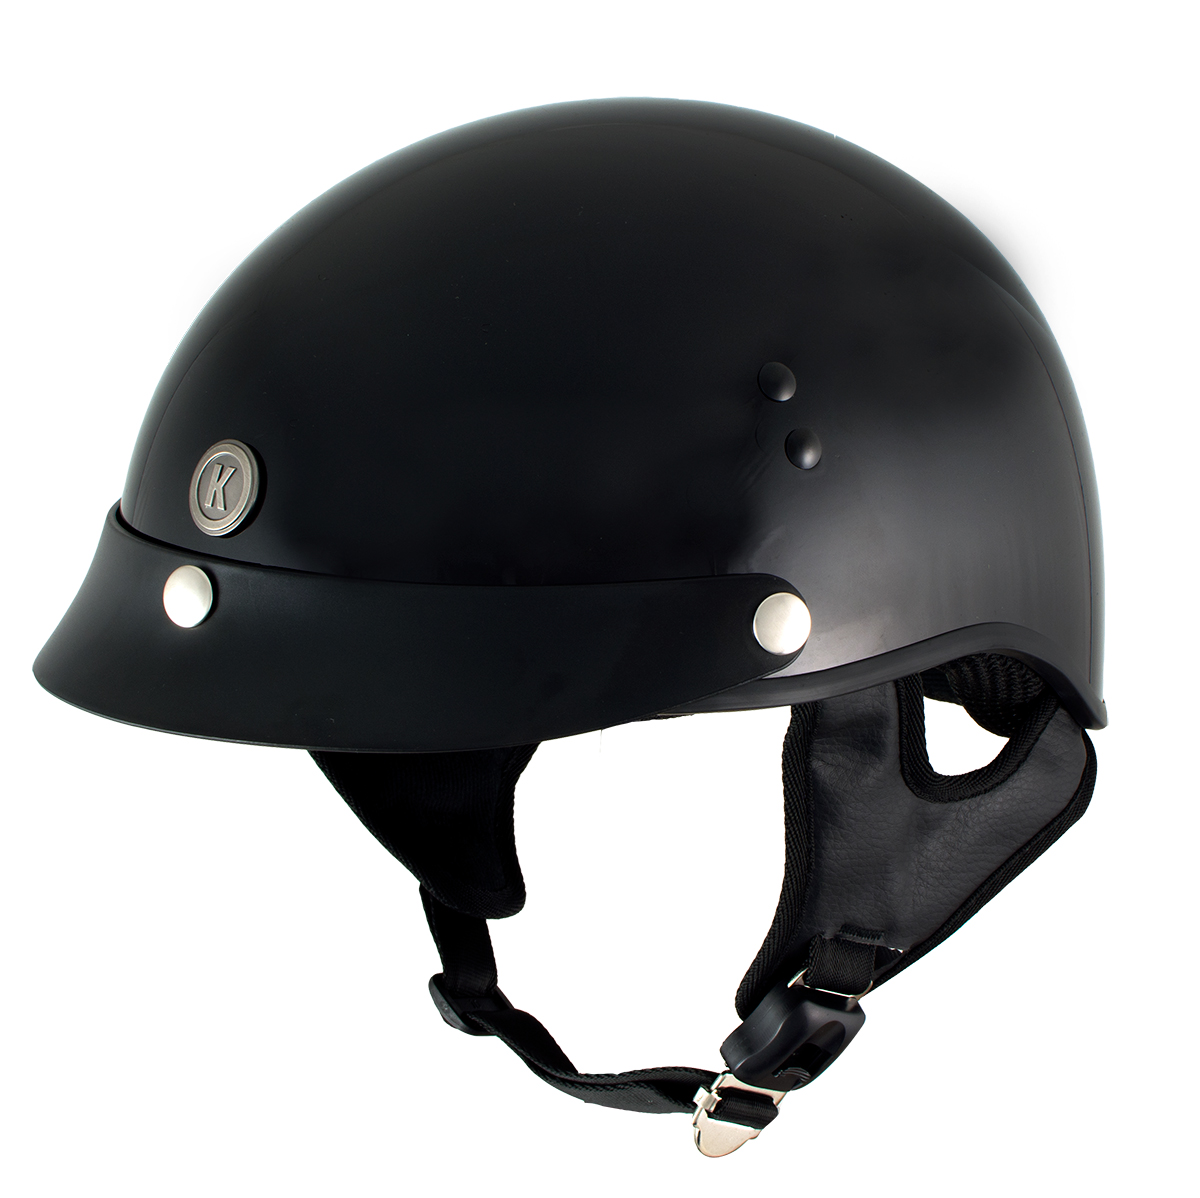 Klutch K-3 'Cruise' Gloss Black Half Face Motorcycle Helmet with Snap On Visor Medium - image 1 of 11